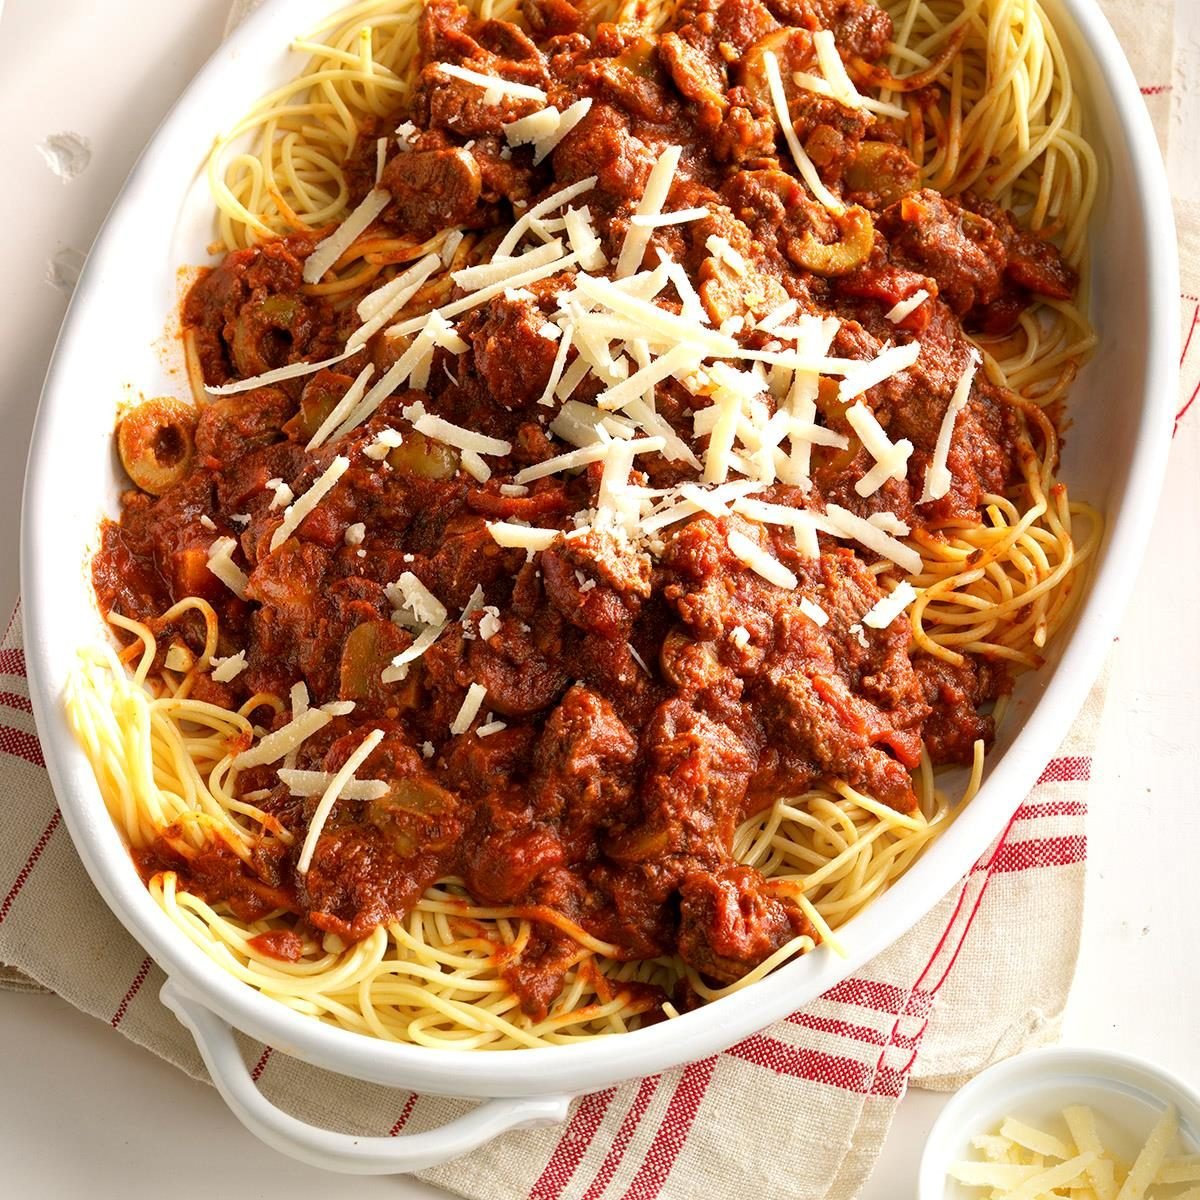 cendrierdesign: Savory Spaghetti Sauce Taste Of Home